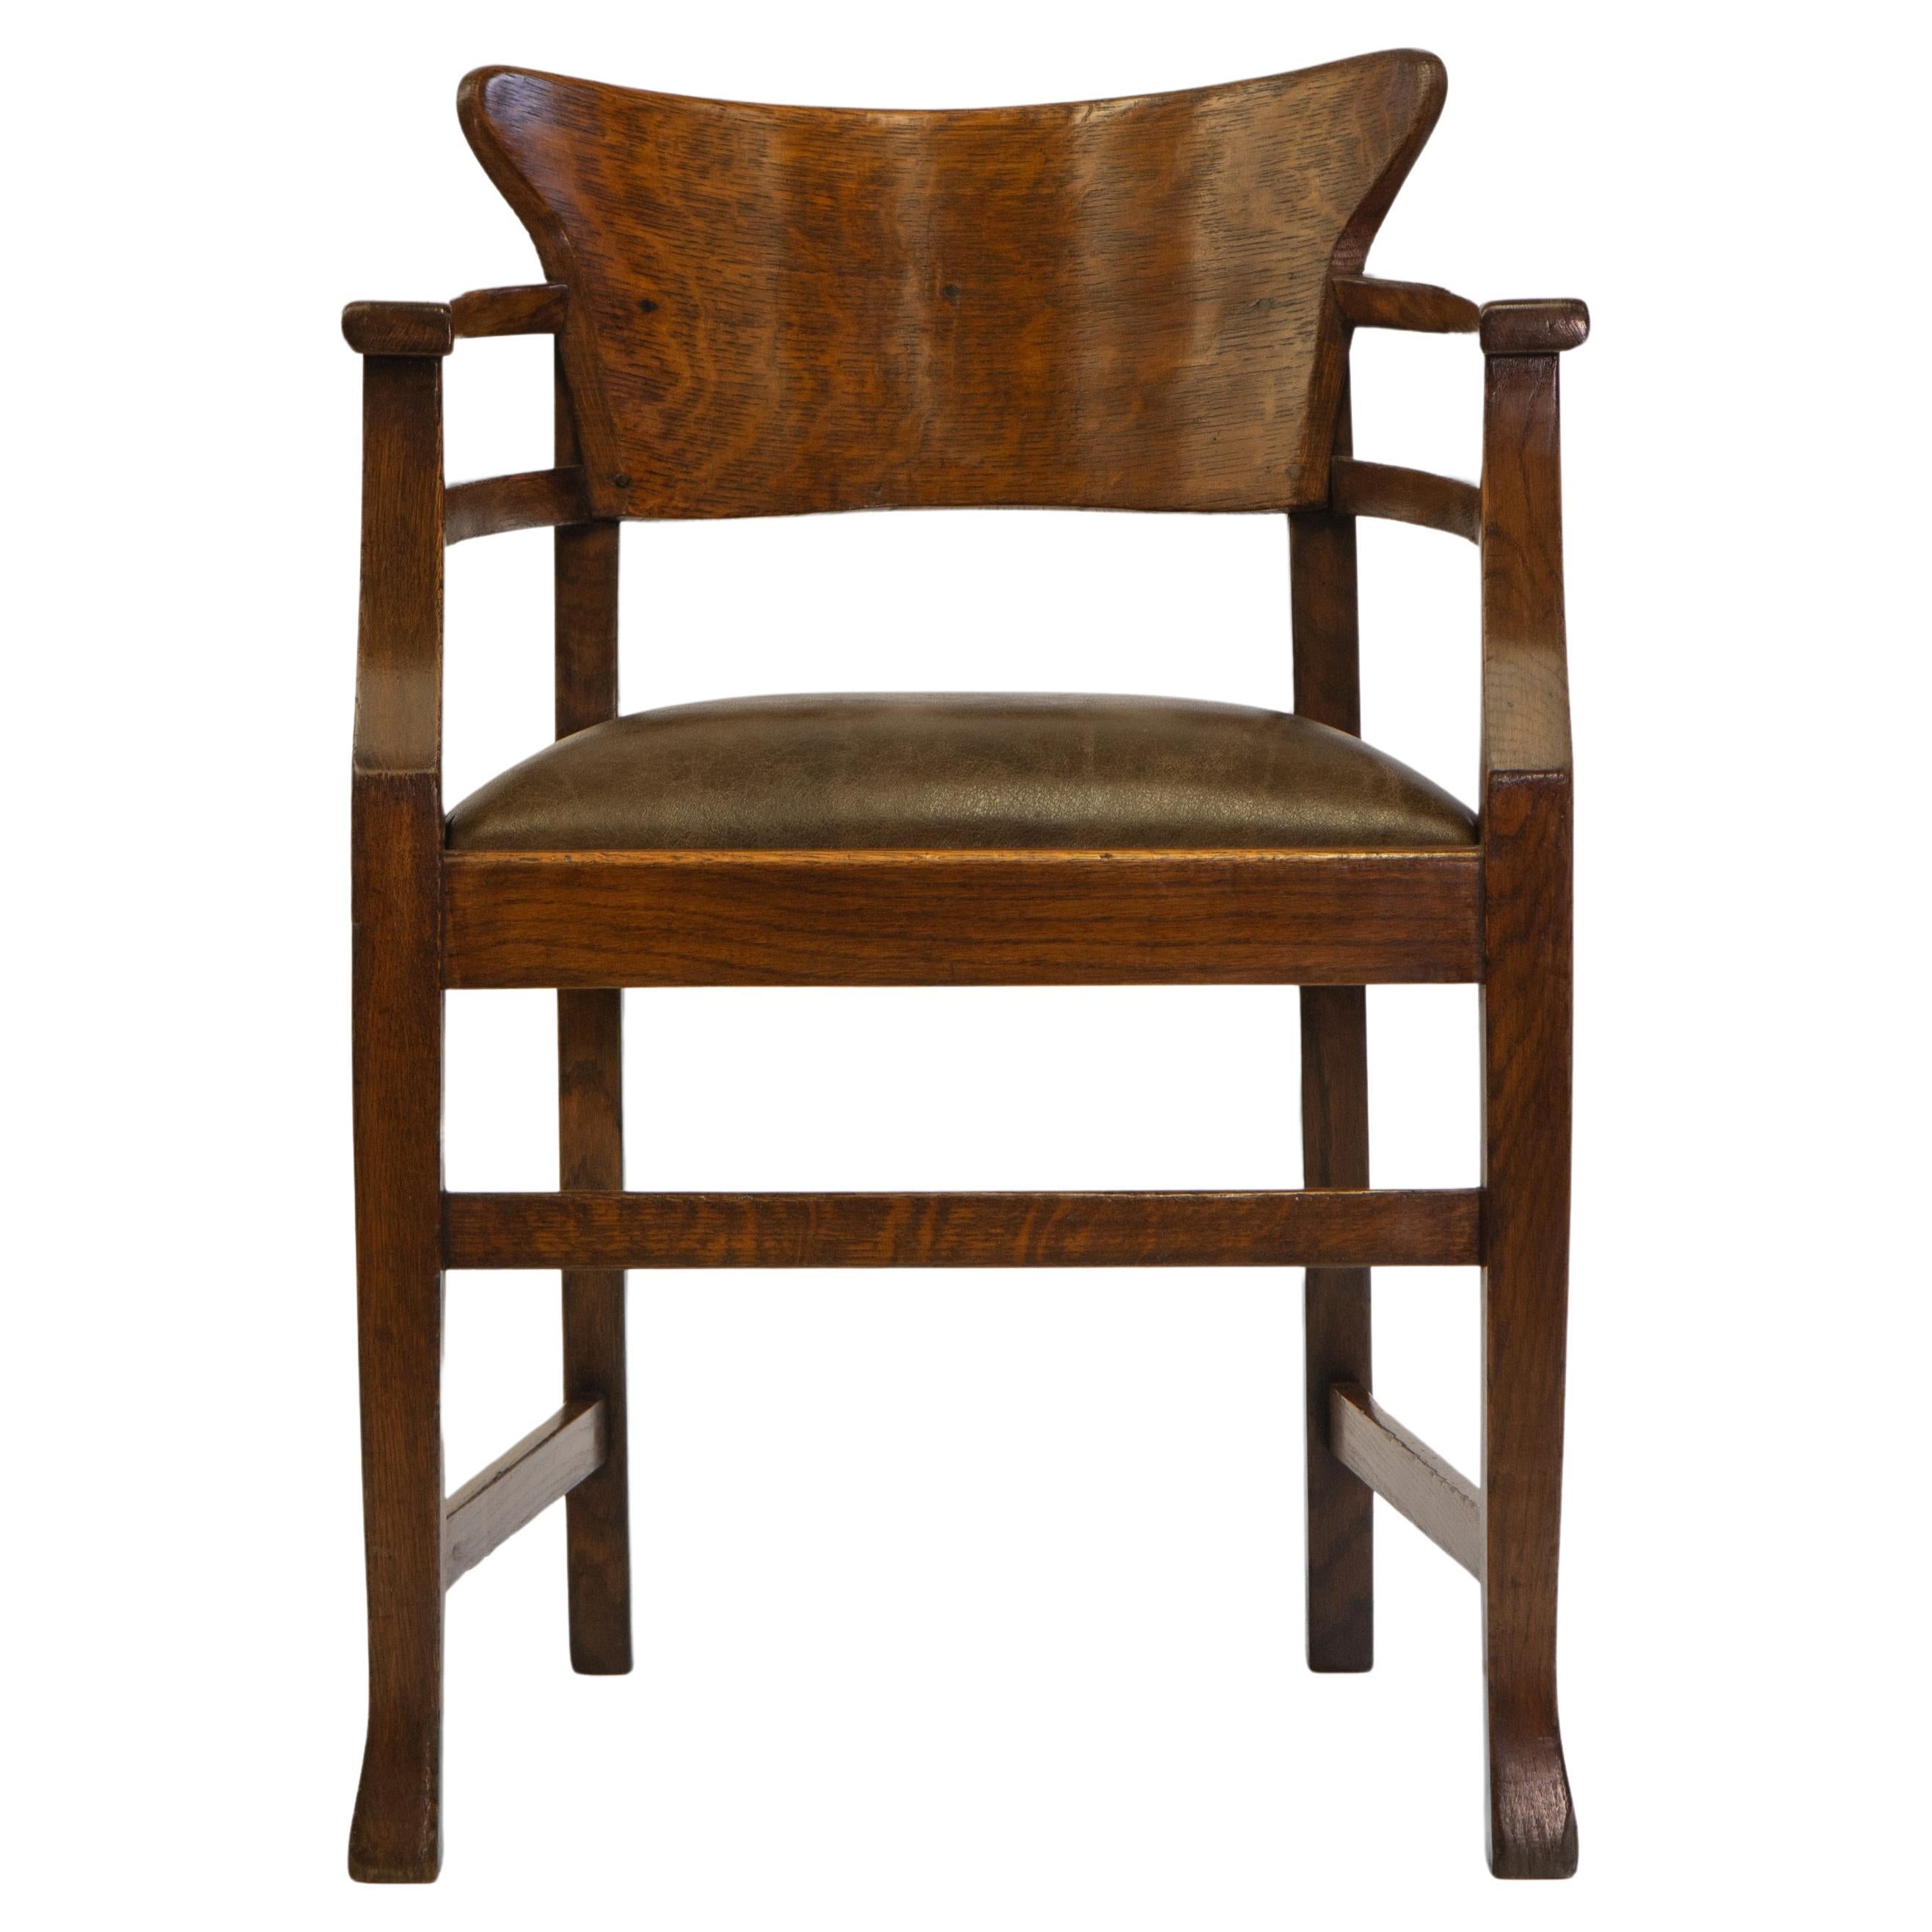 Art & Crafts Oak and Leather Desk Chair In The Richard Riemerschmid Manner